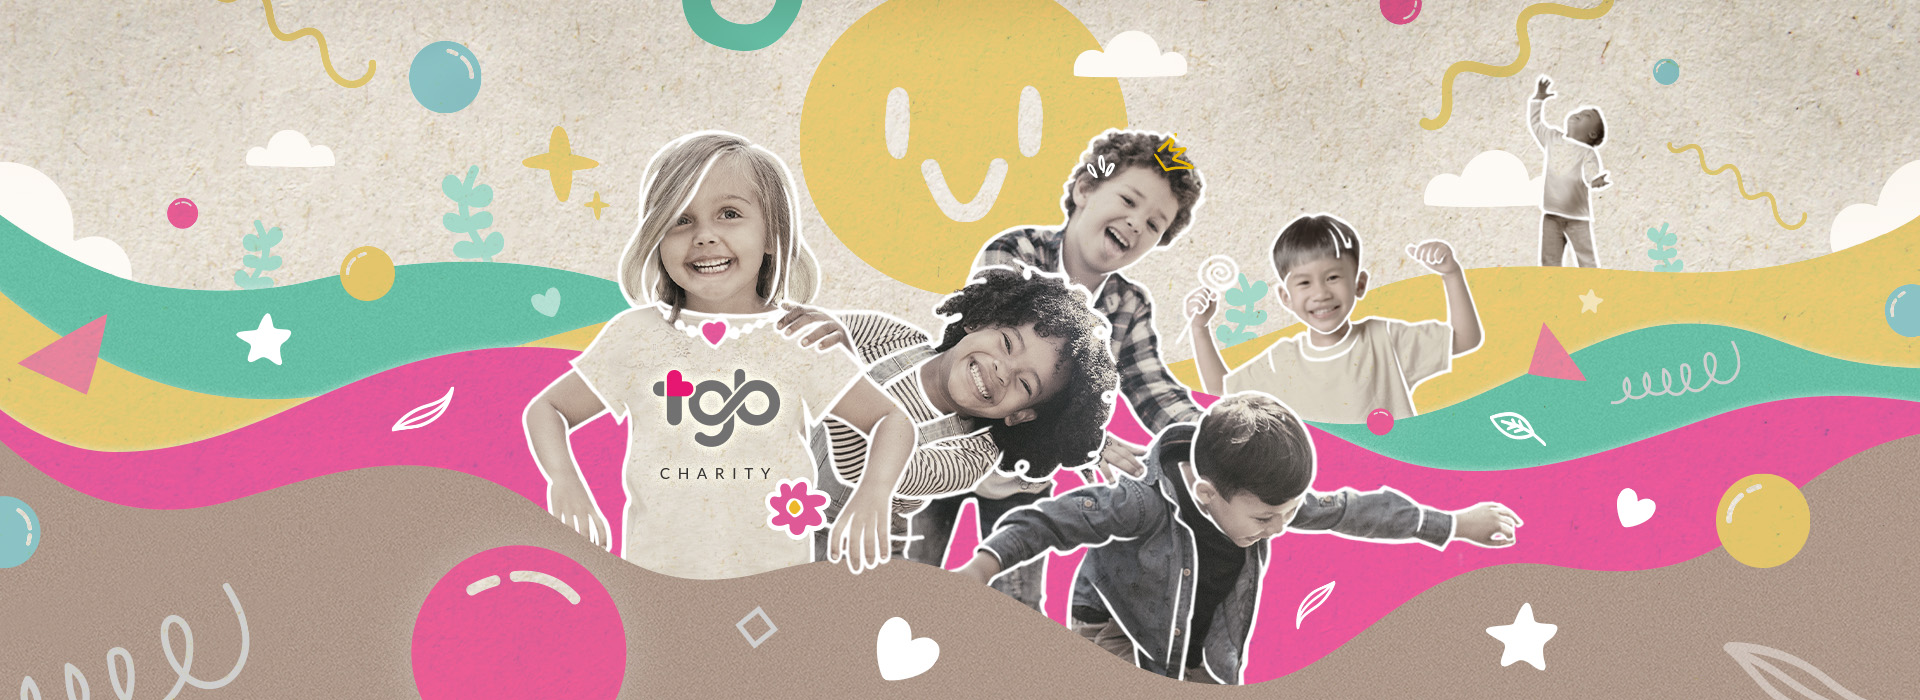 TGB Charity: 每个孩子都值得美好的未来